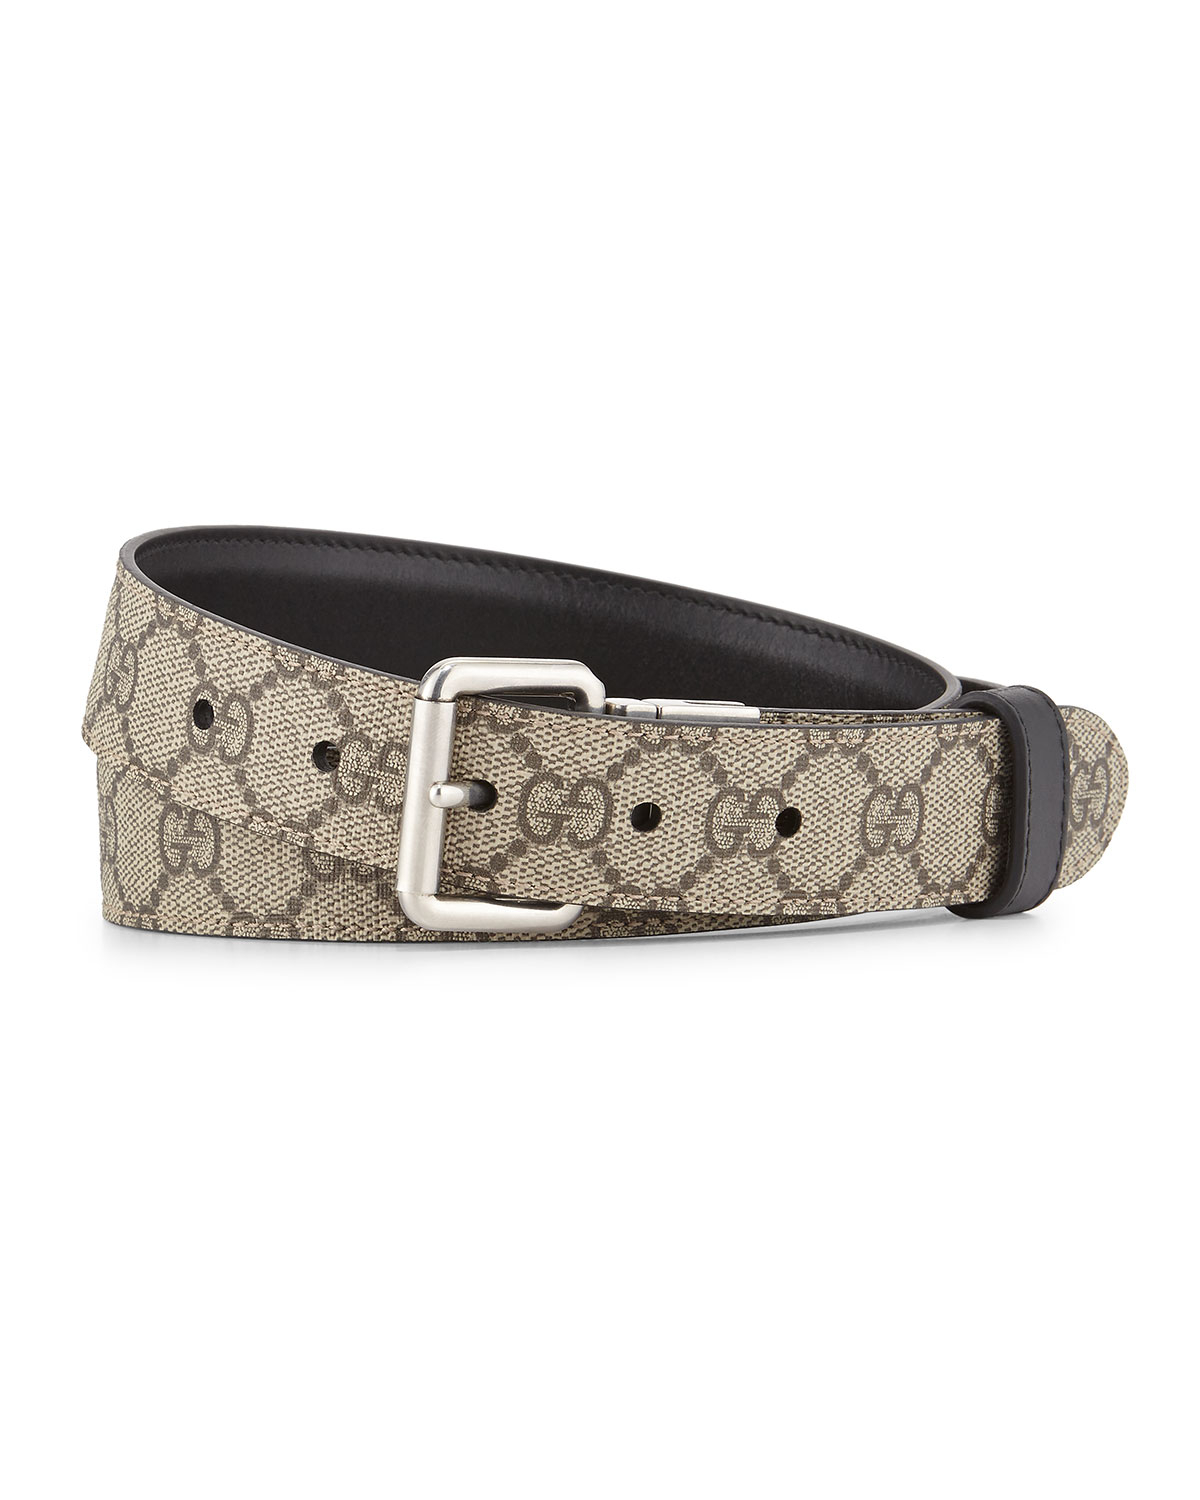 Gucci Gg Monogram Reversible Belt in Black - Lyst